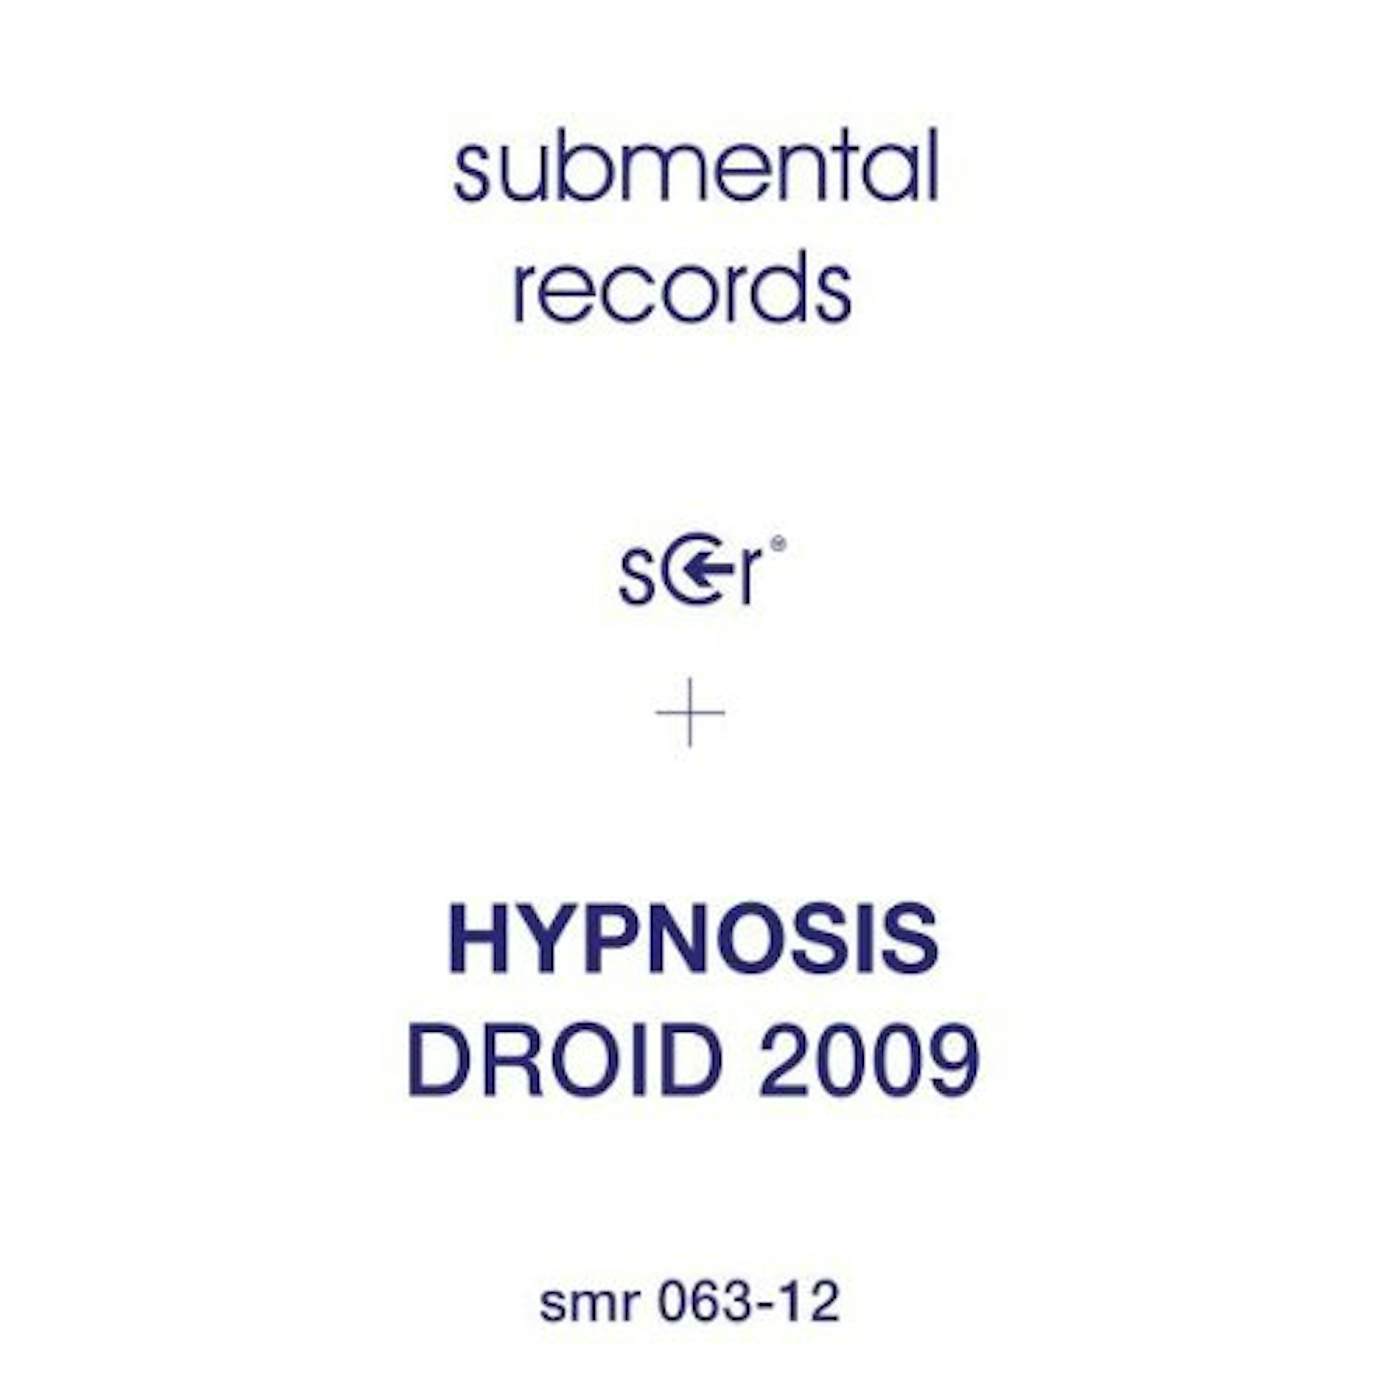 Hypnosis Droid 2009 Vinyl Record